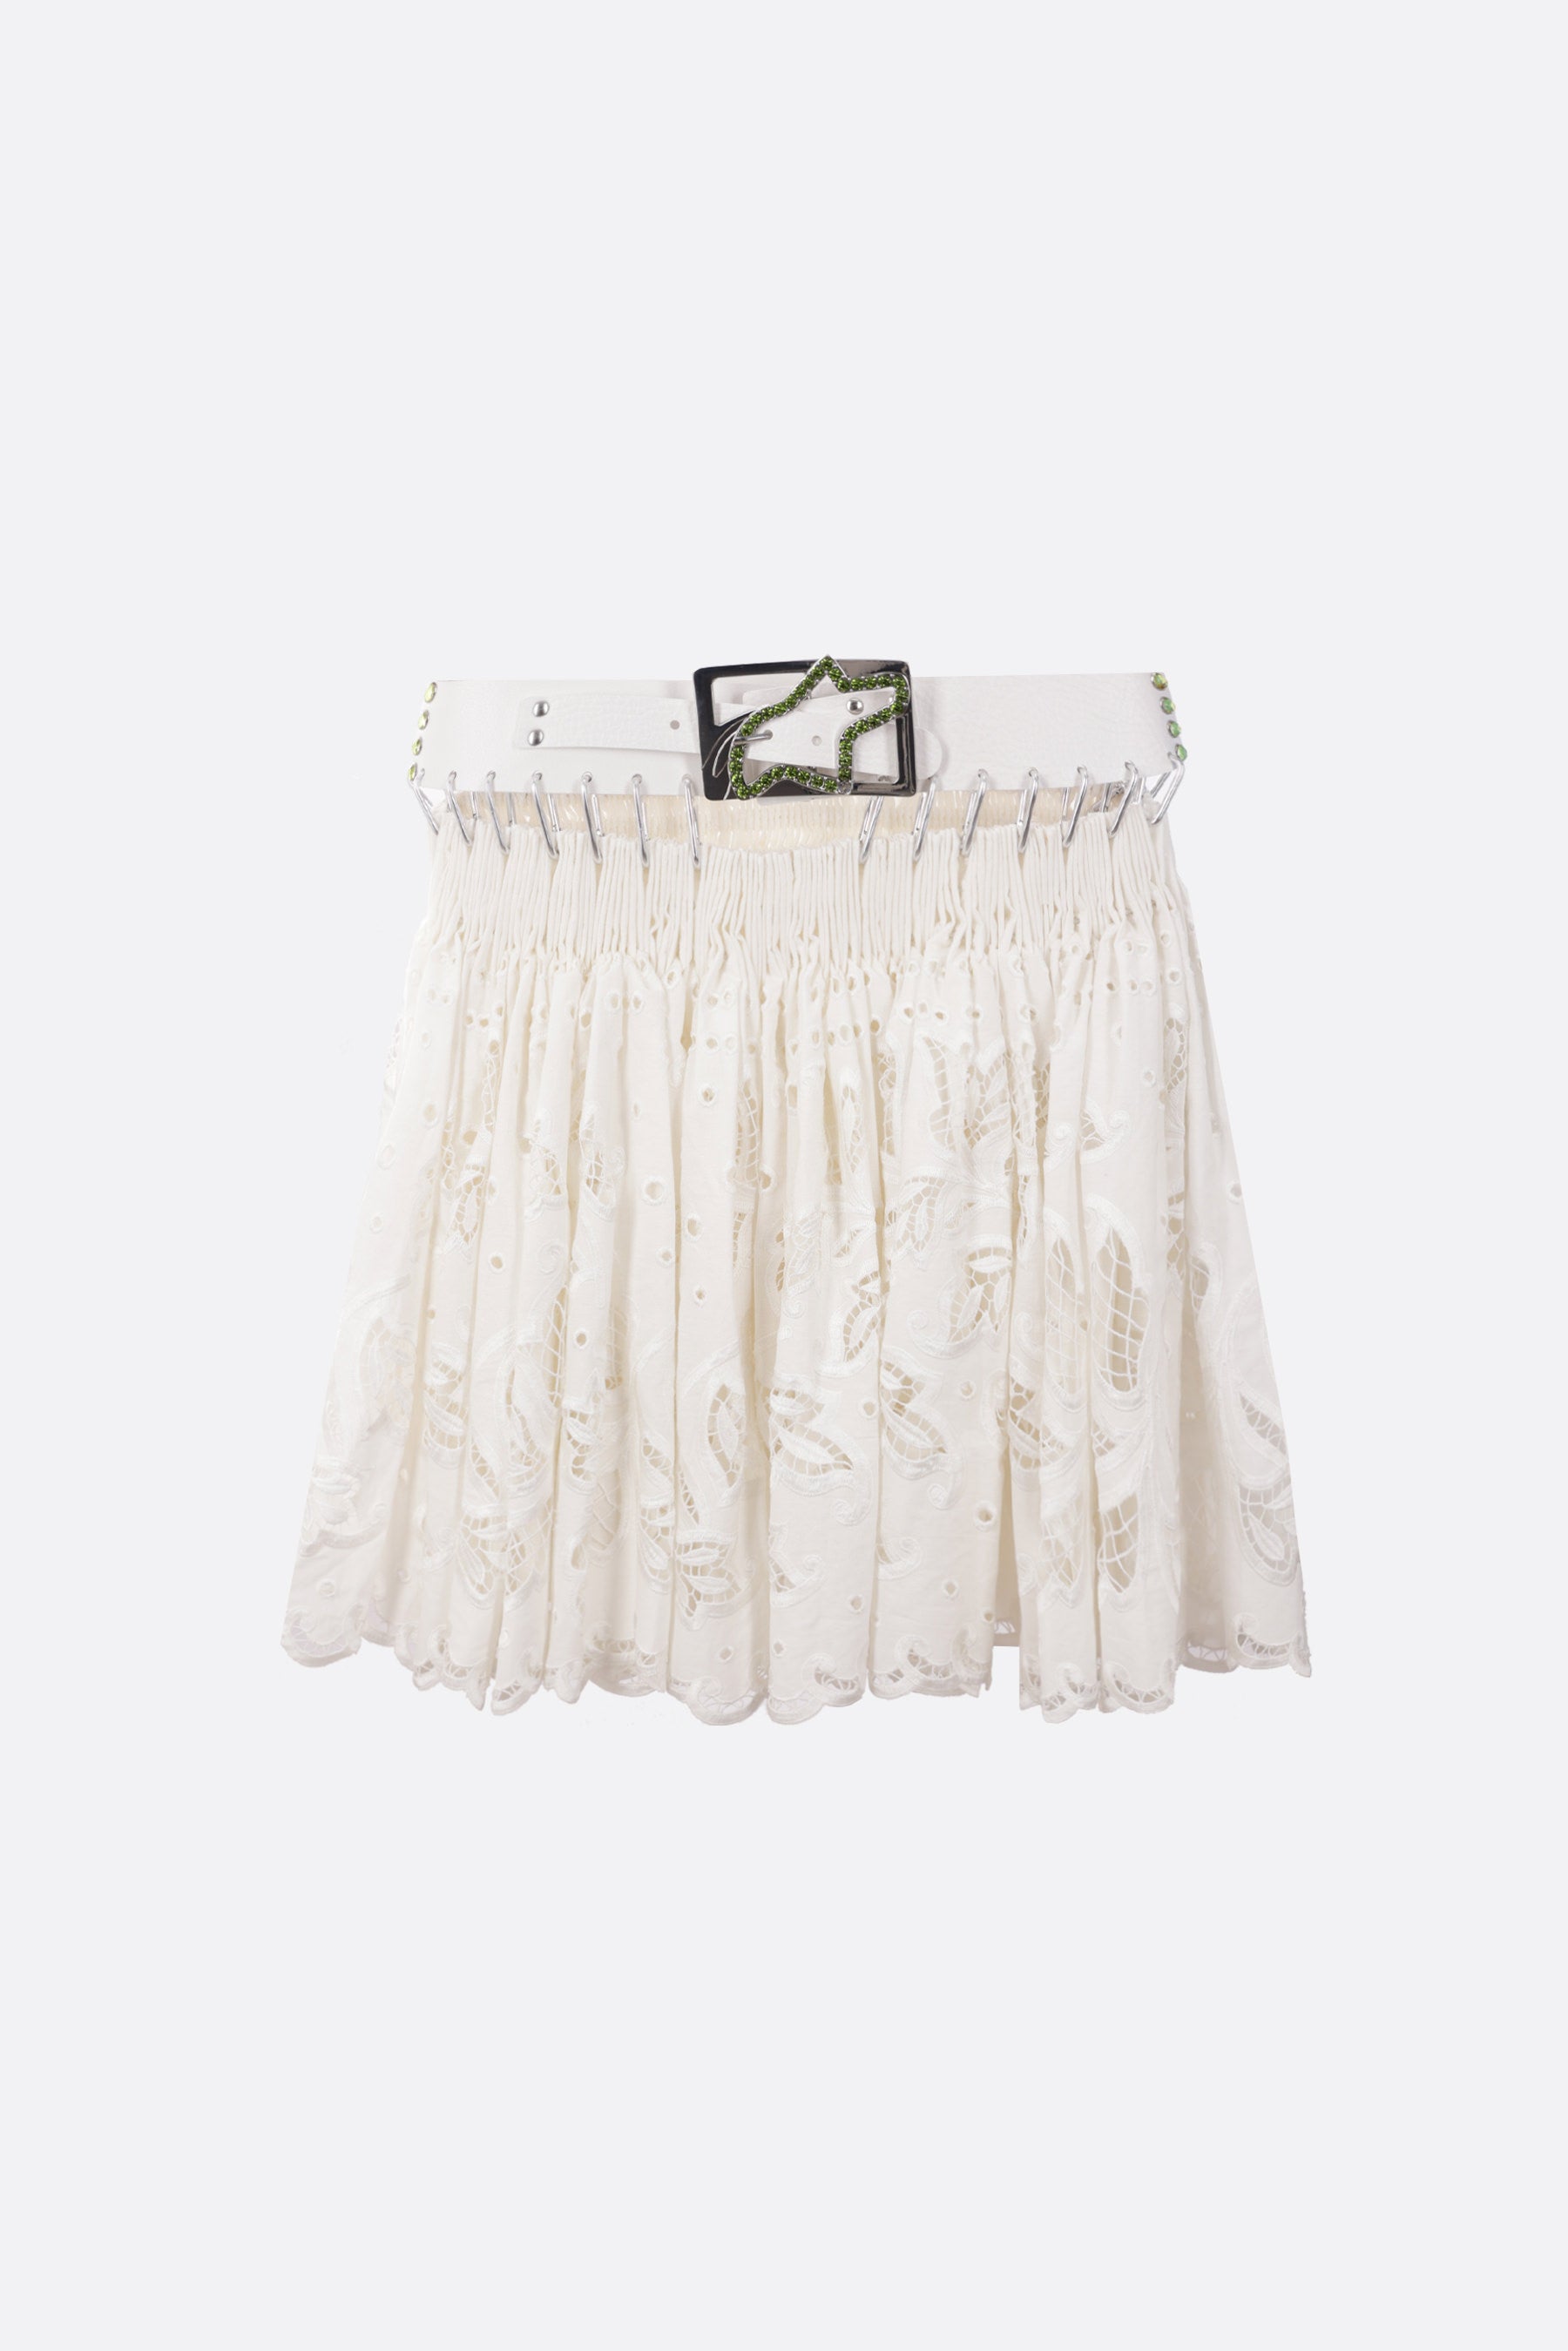 Barley lace miniskirt with belt